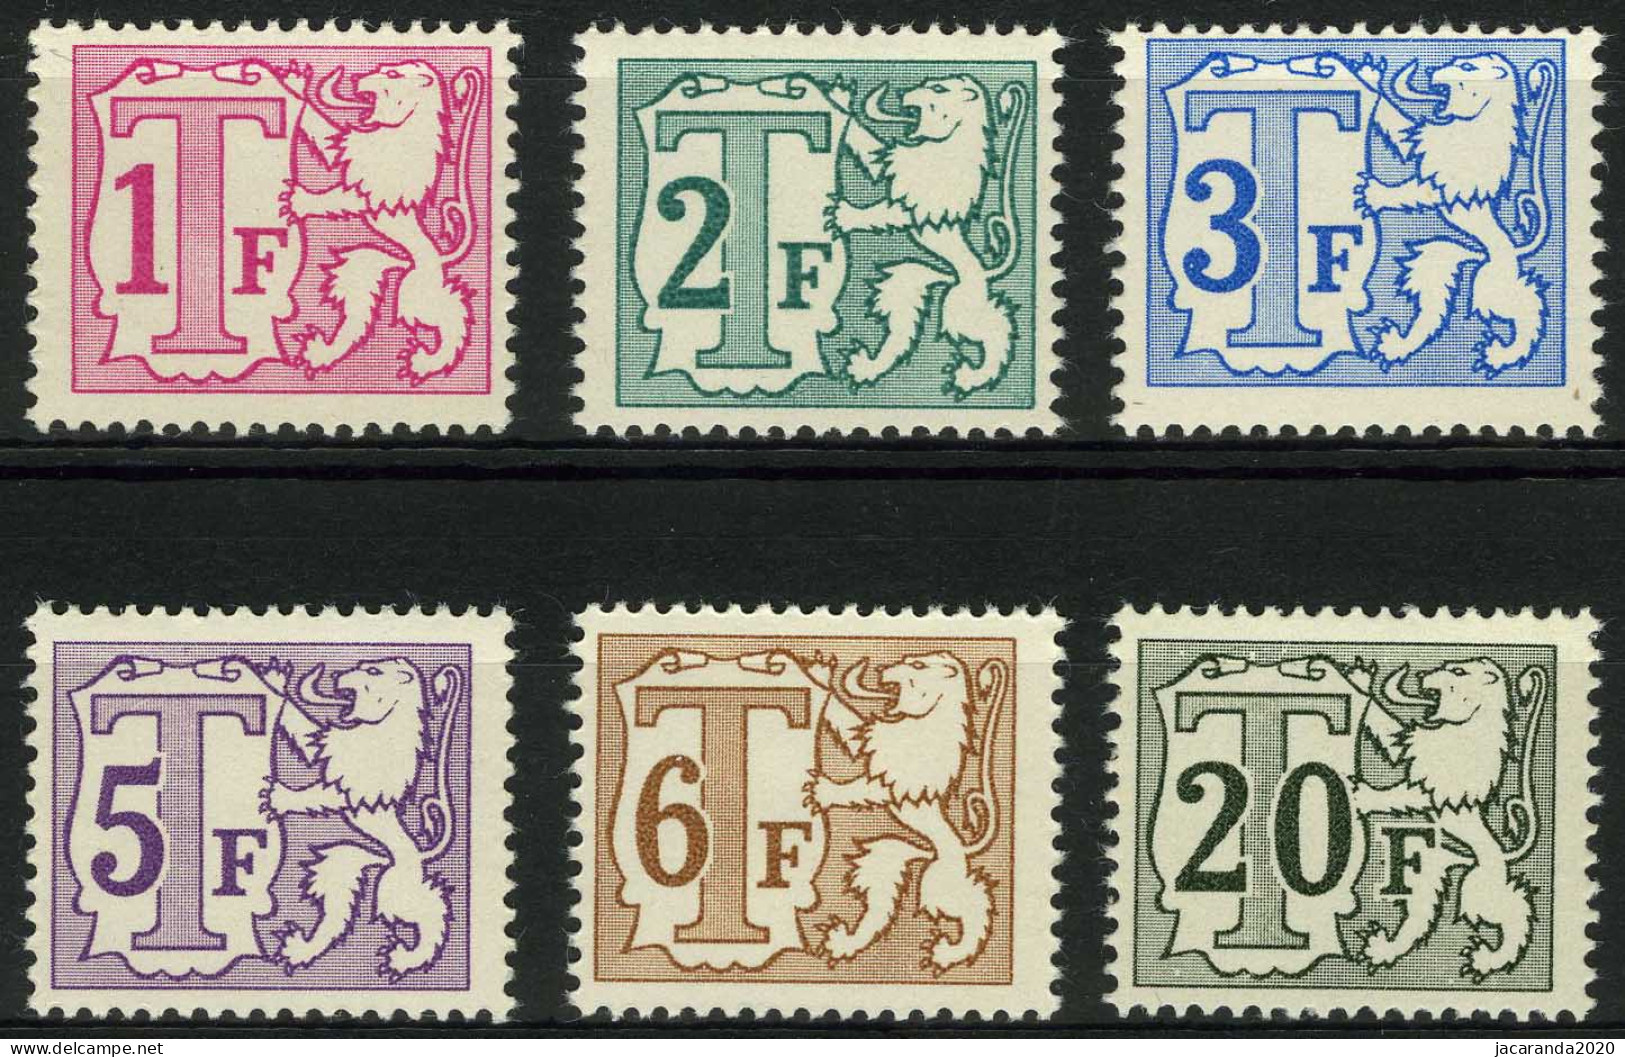 TX 66A/72 A - Strafportzegels - Groot Waardecijfer - 6w. - DOF Papier - Papier TERNE - Stamps